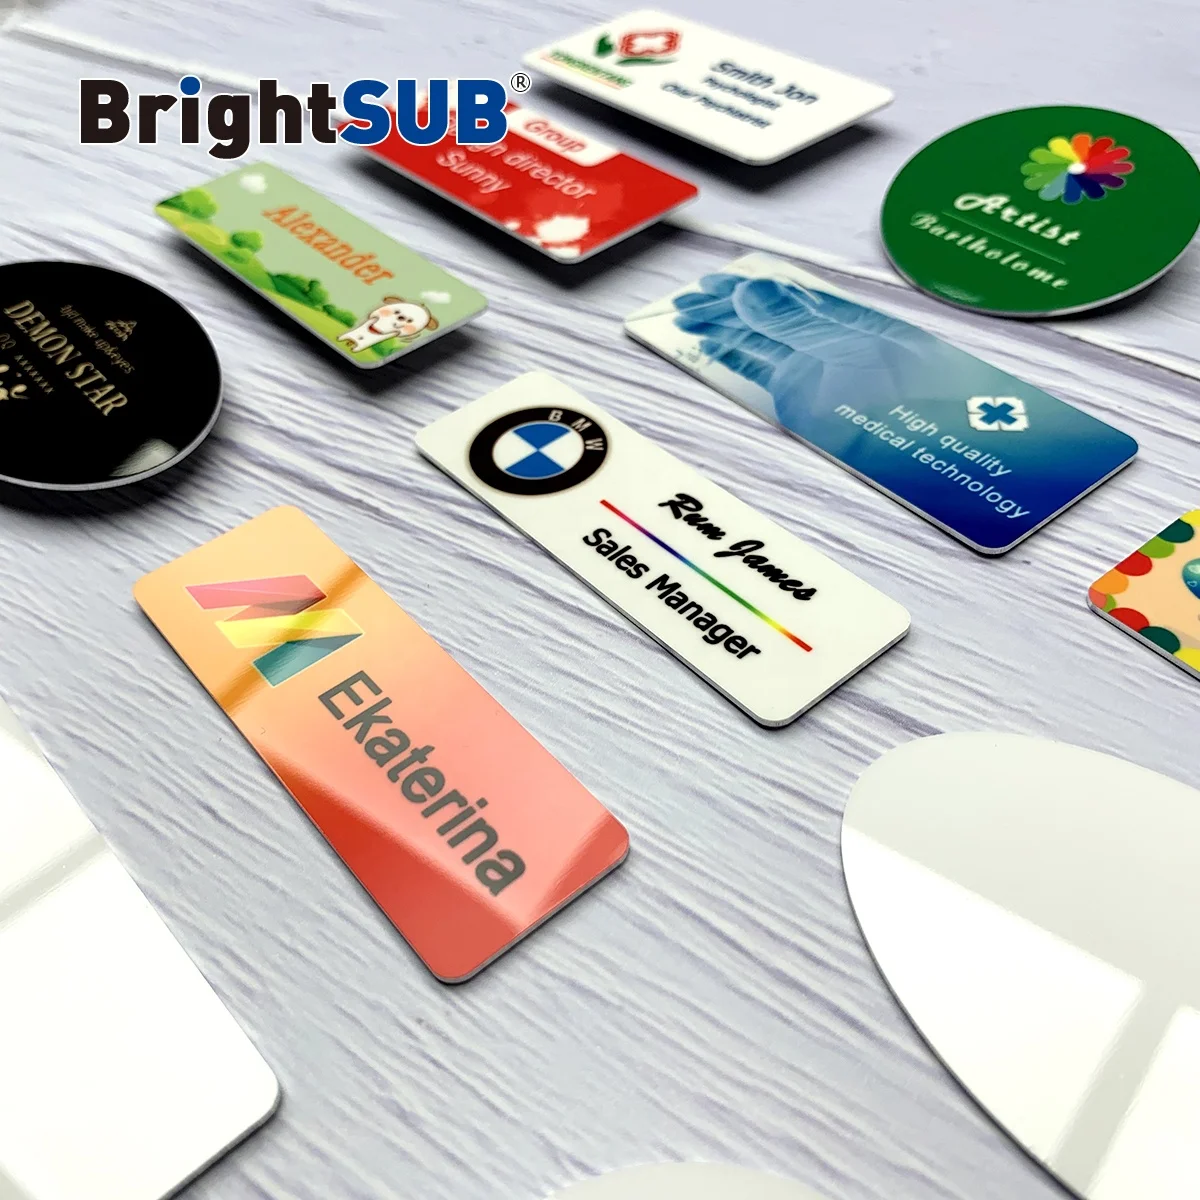 BrightSUB 1.0mm gloss white Sublimation Aluminum Name badge metal name badges heat transfer prints custom printable coated blank